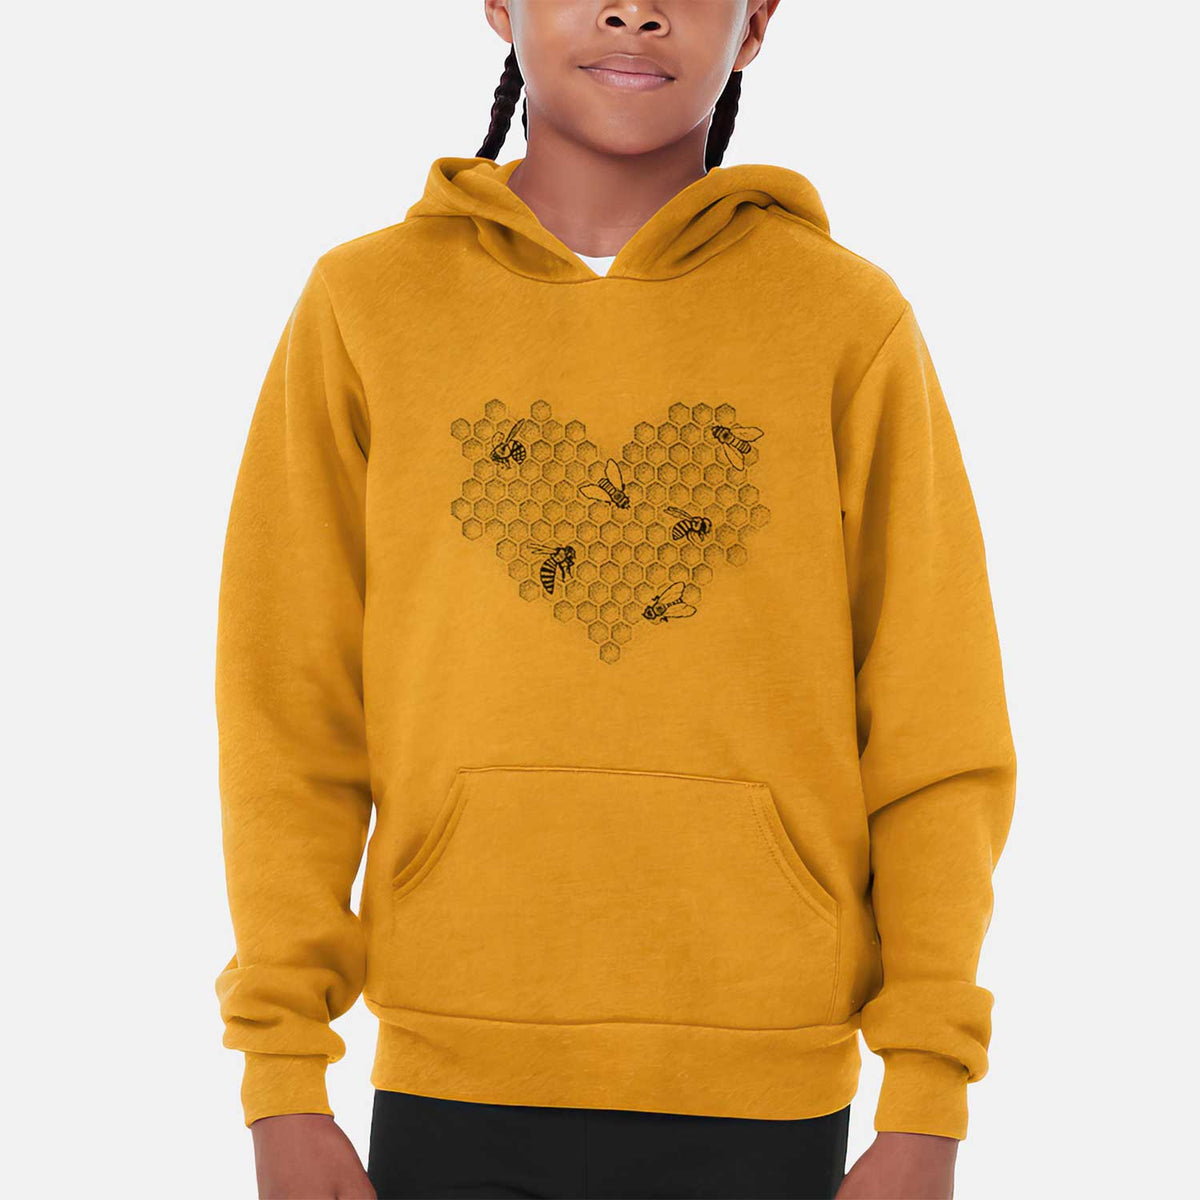 Honeycomb Heart with Bees - Youth Hoodie Sweatshirt